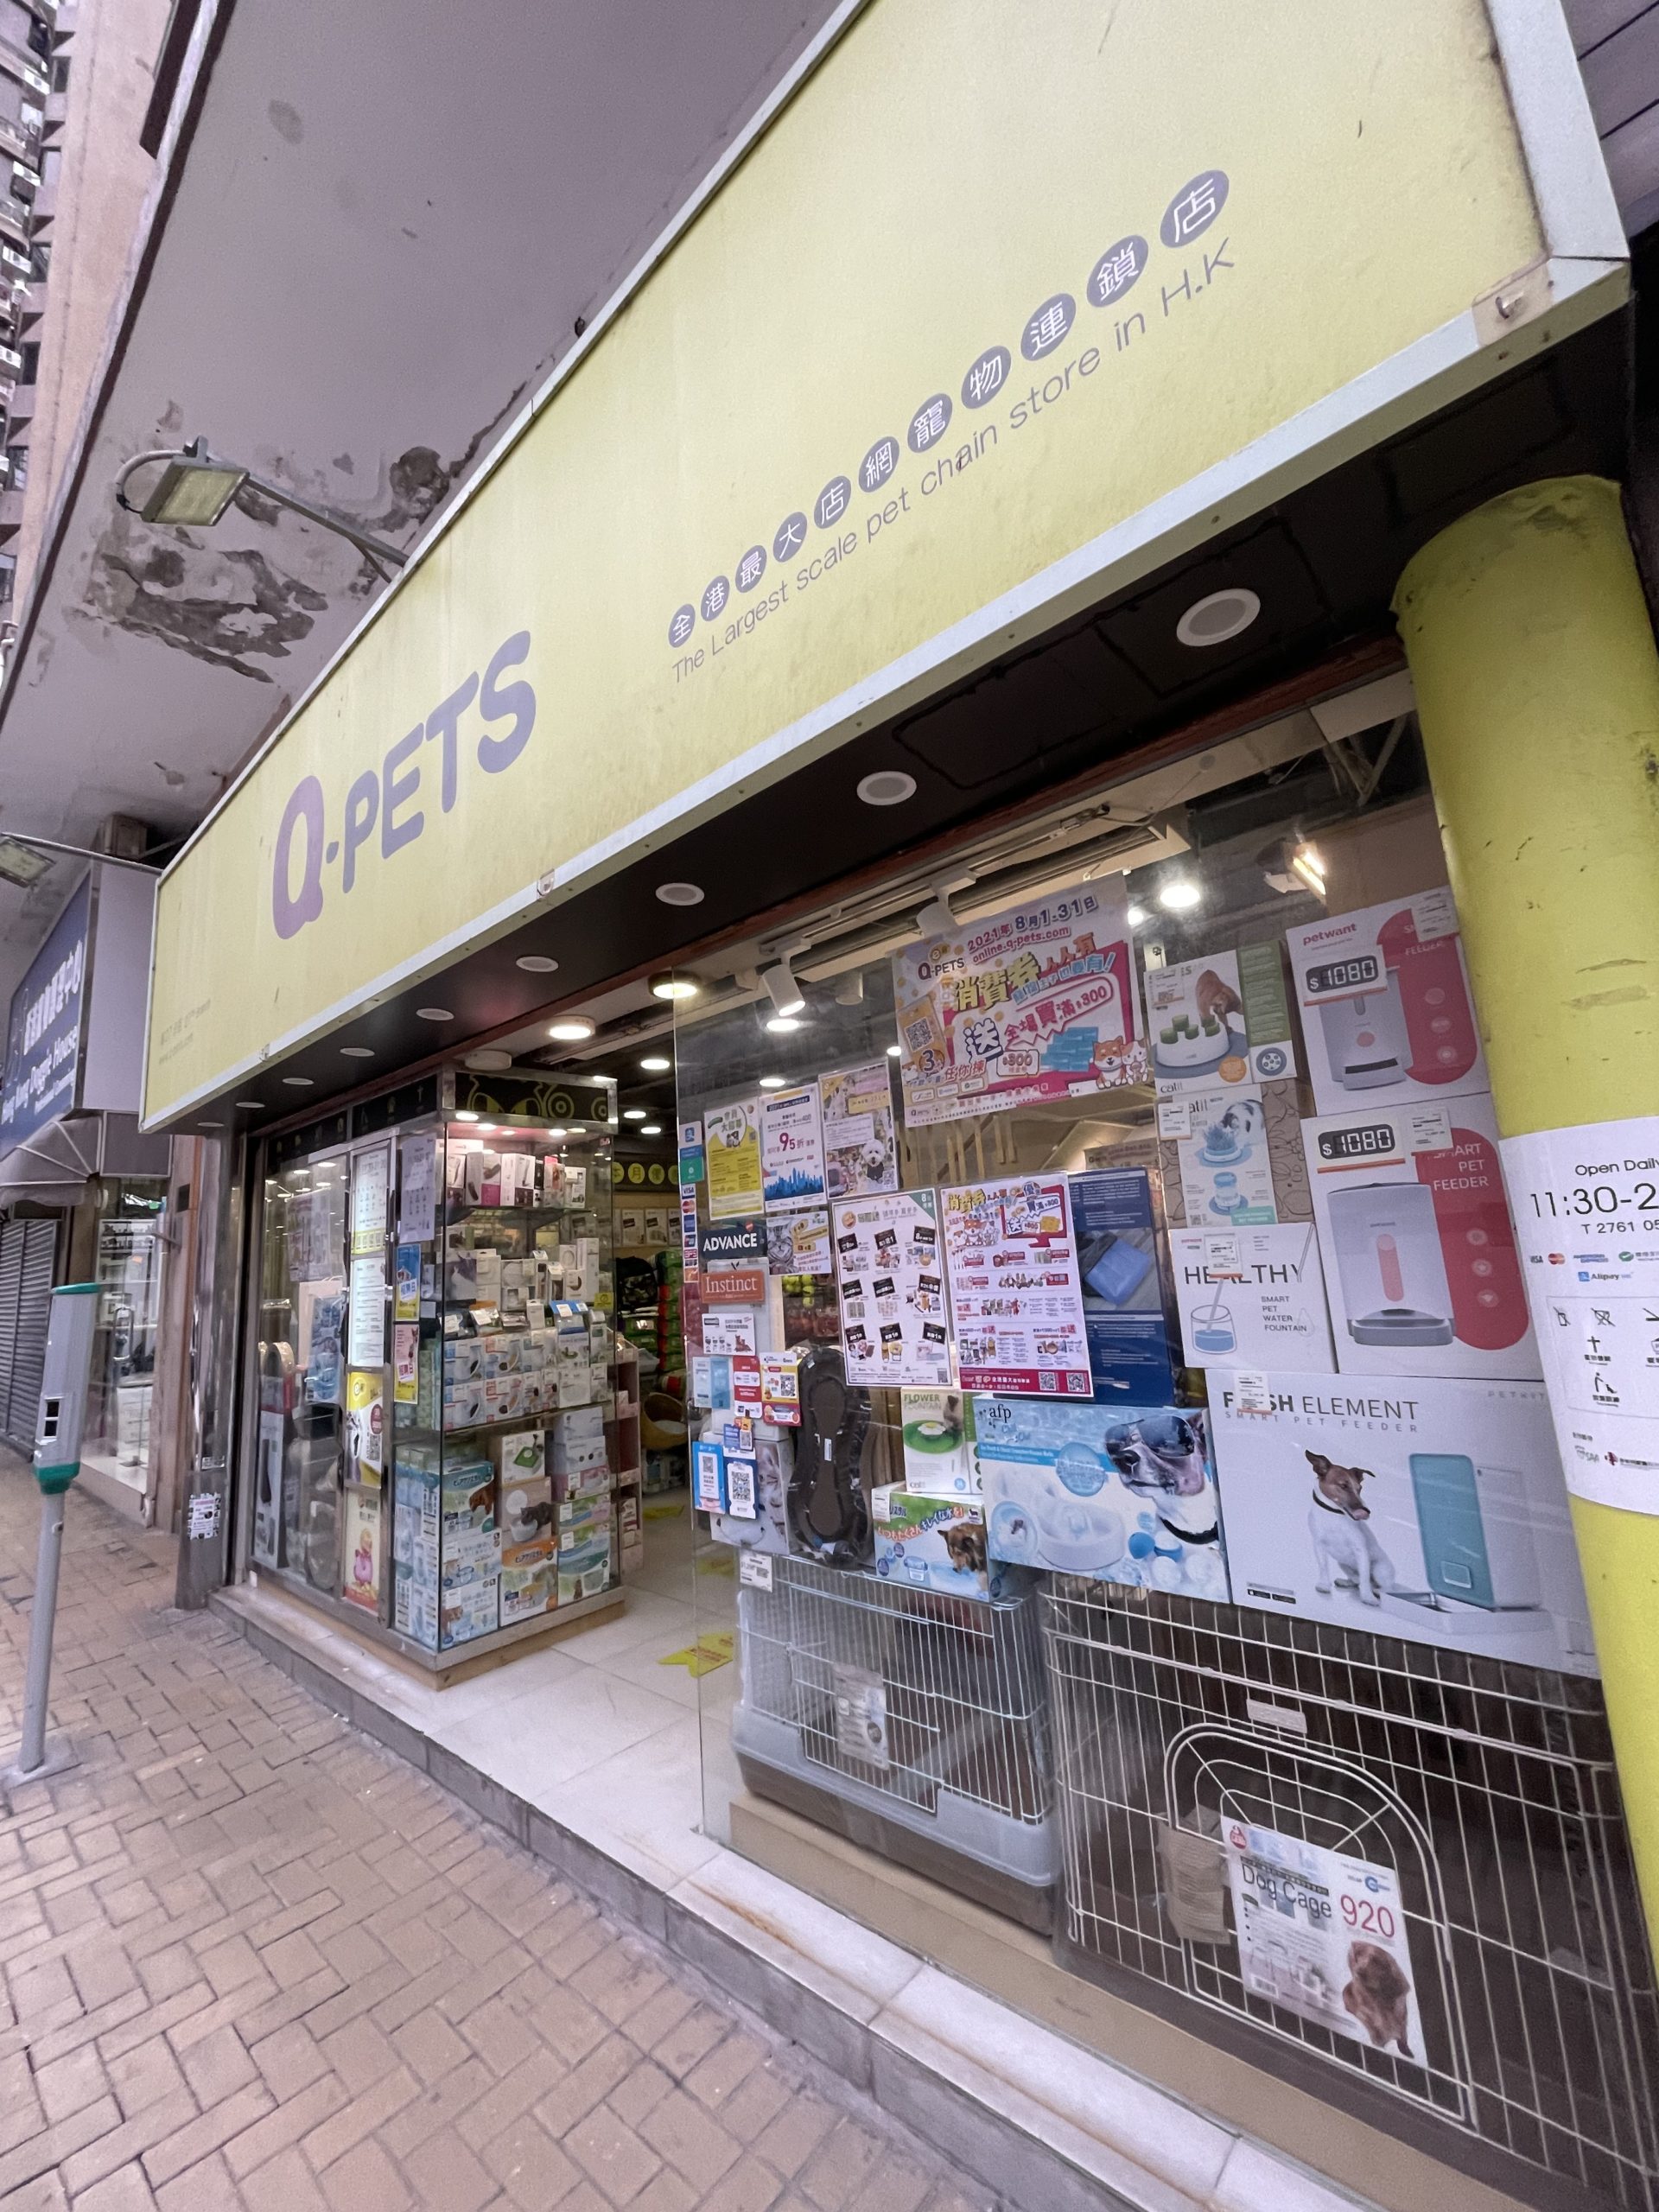 Q-PETs (太平道 Peace Avenue)